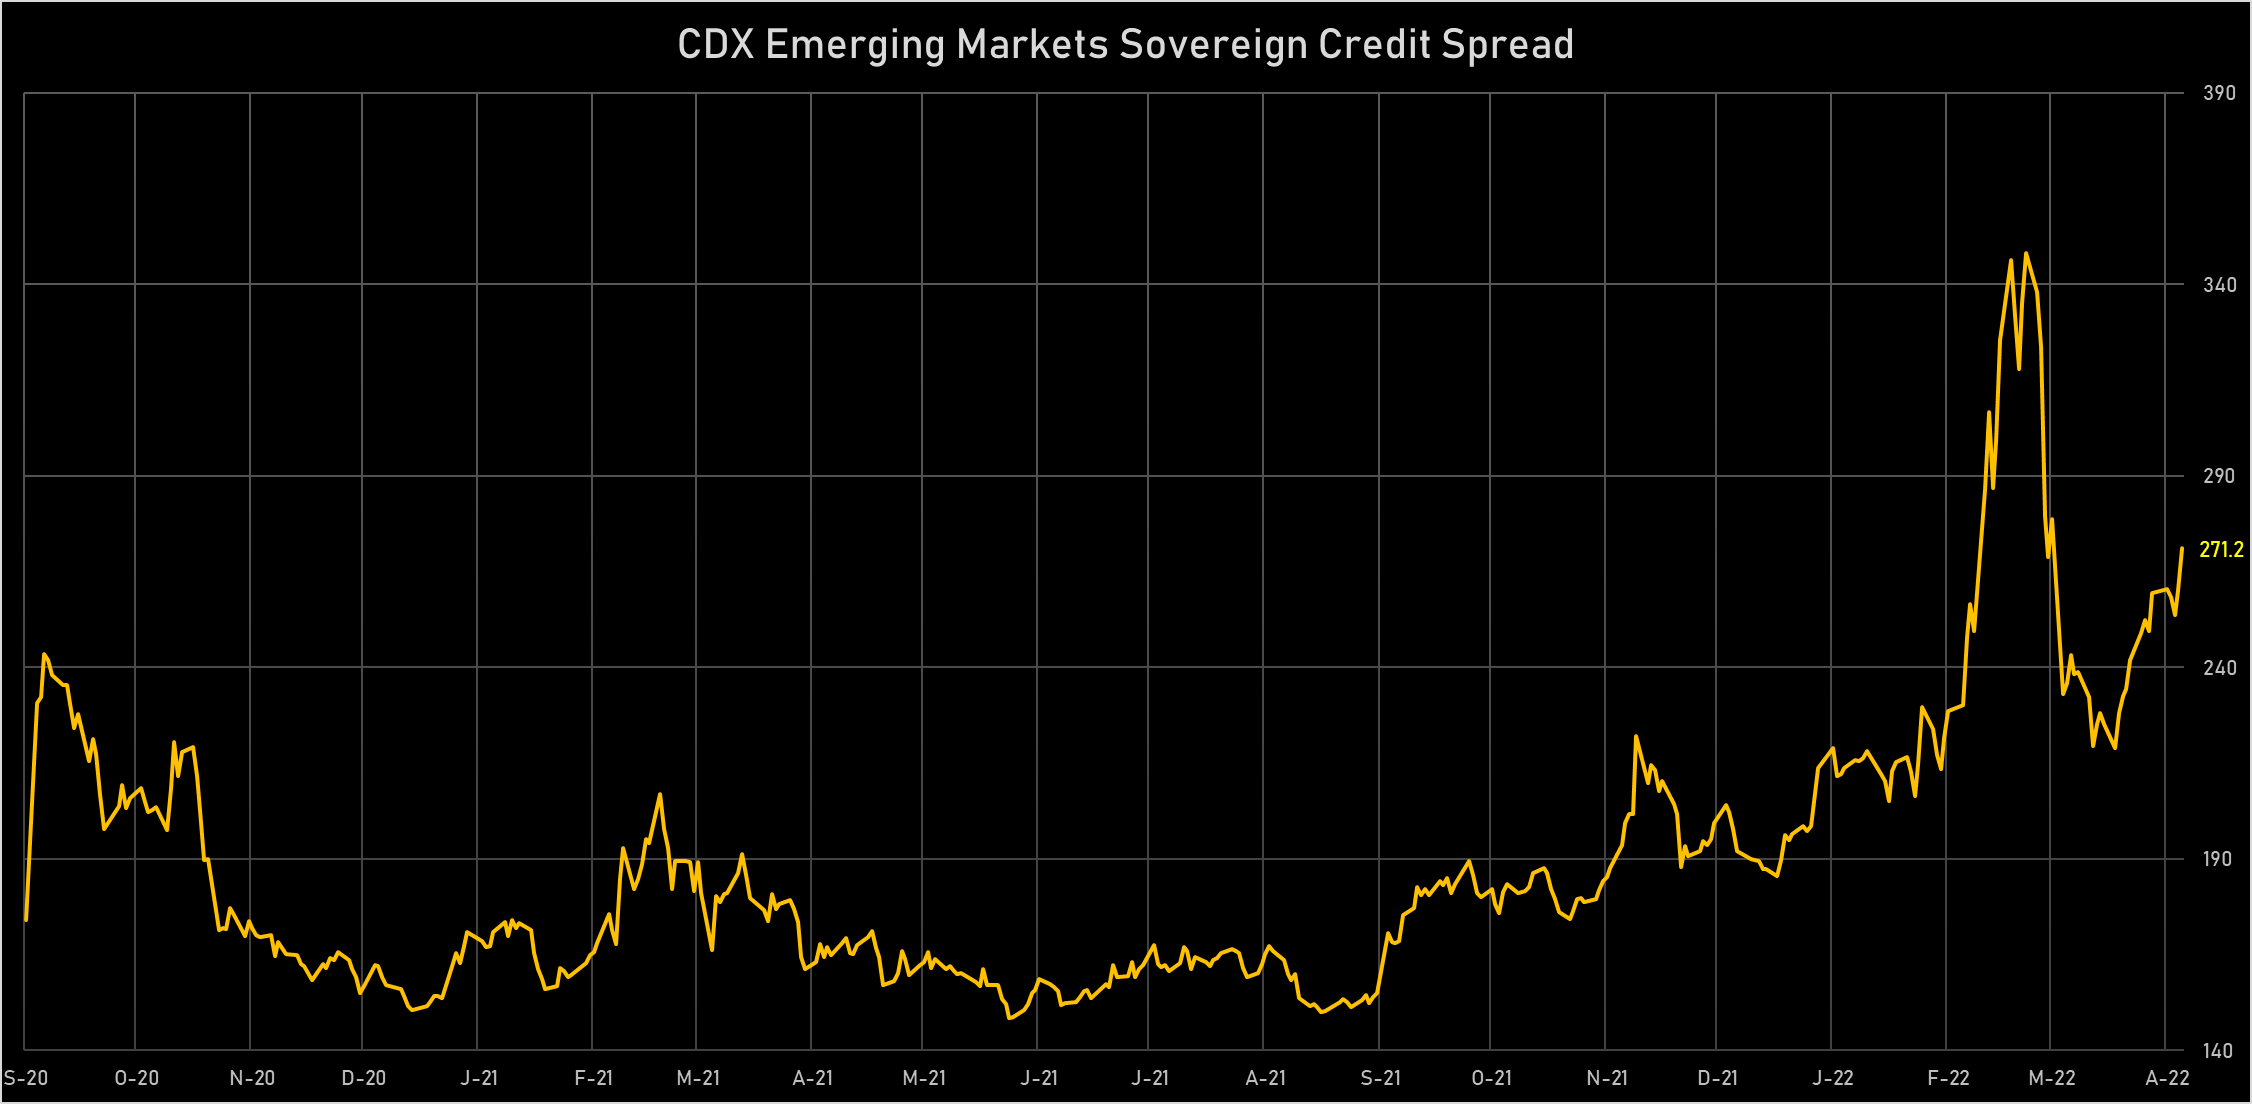 CDX Emerging Market Sovereign Credit Spread | Sources: phipost.com, Refinitiv data